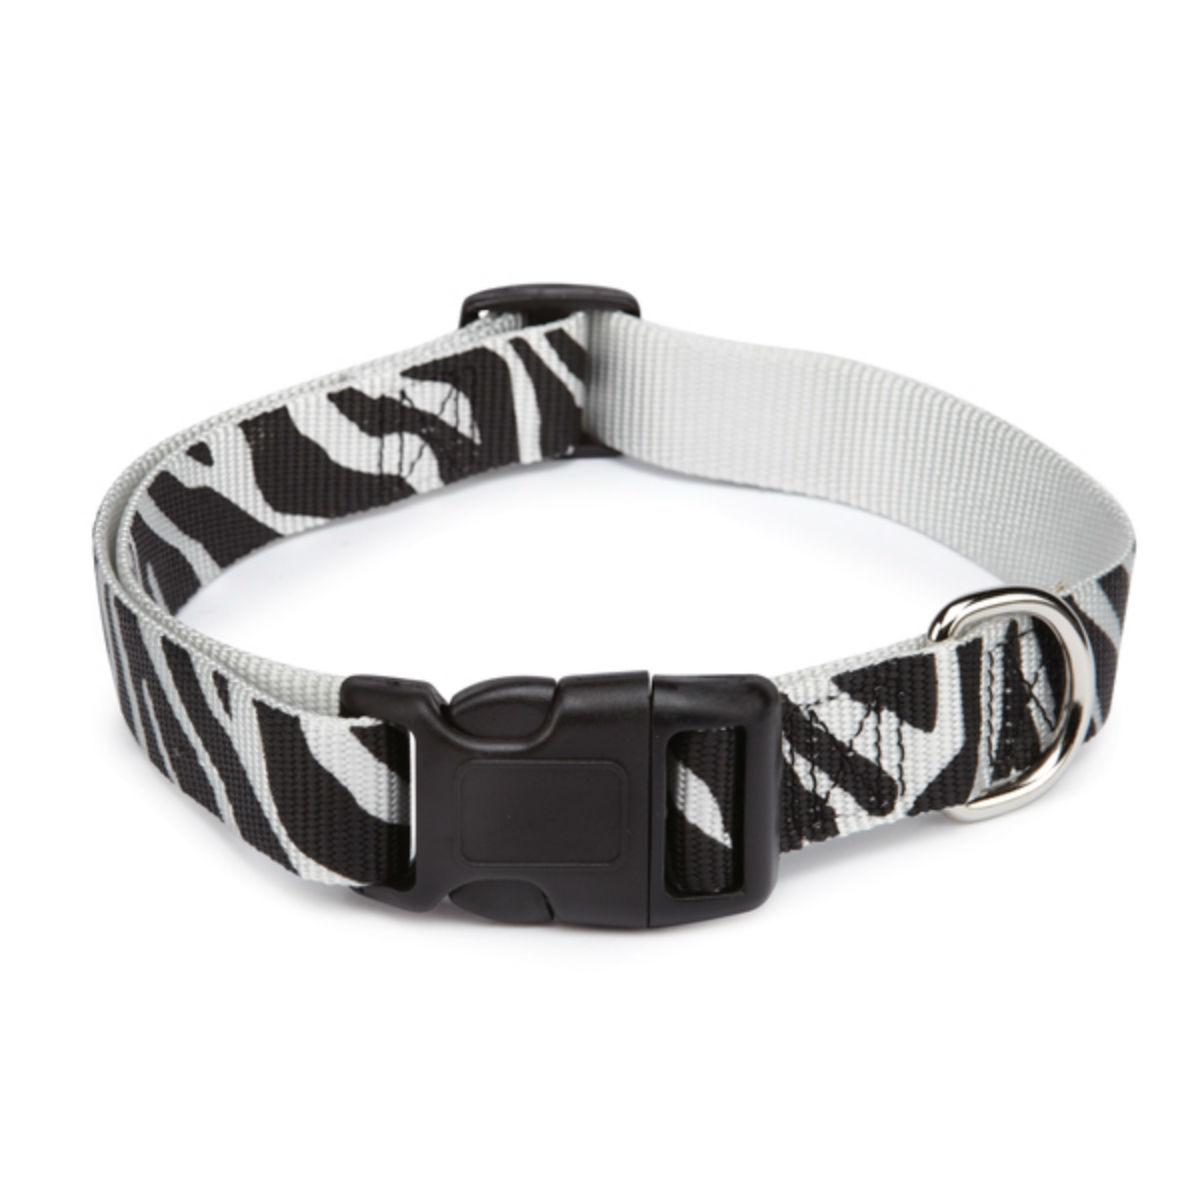 Casual Canine Animal Print Dog Collar - Zebra